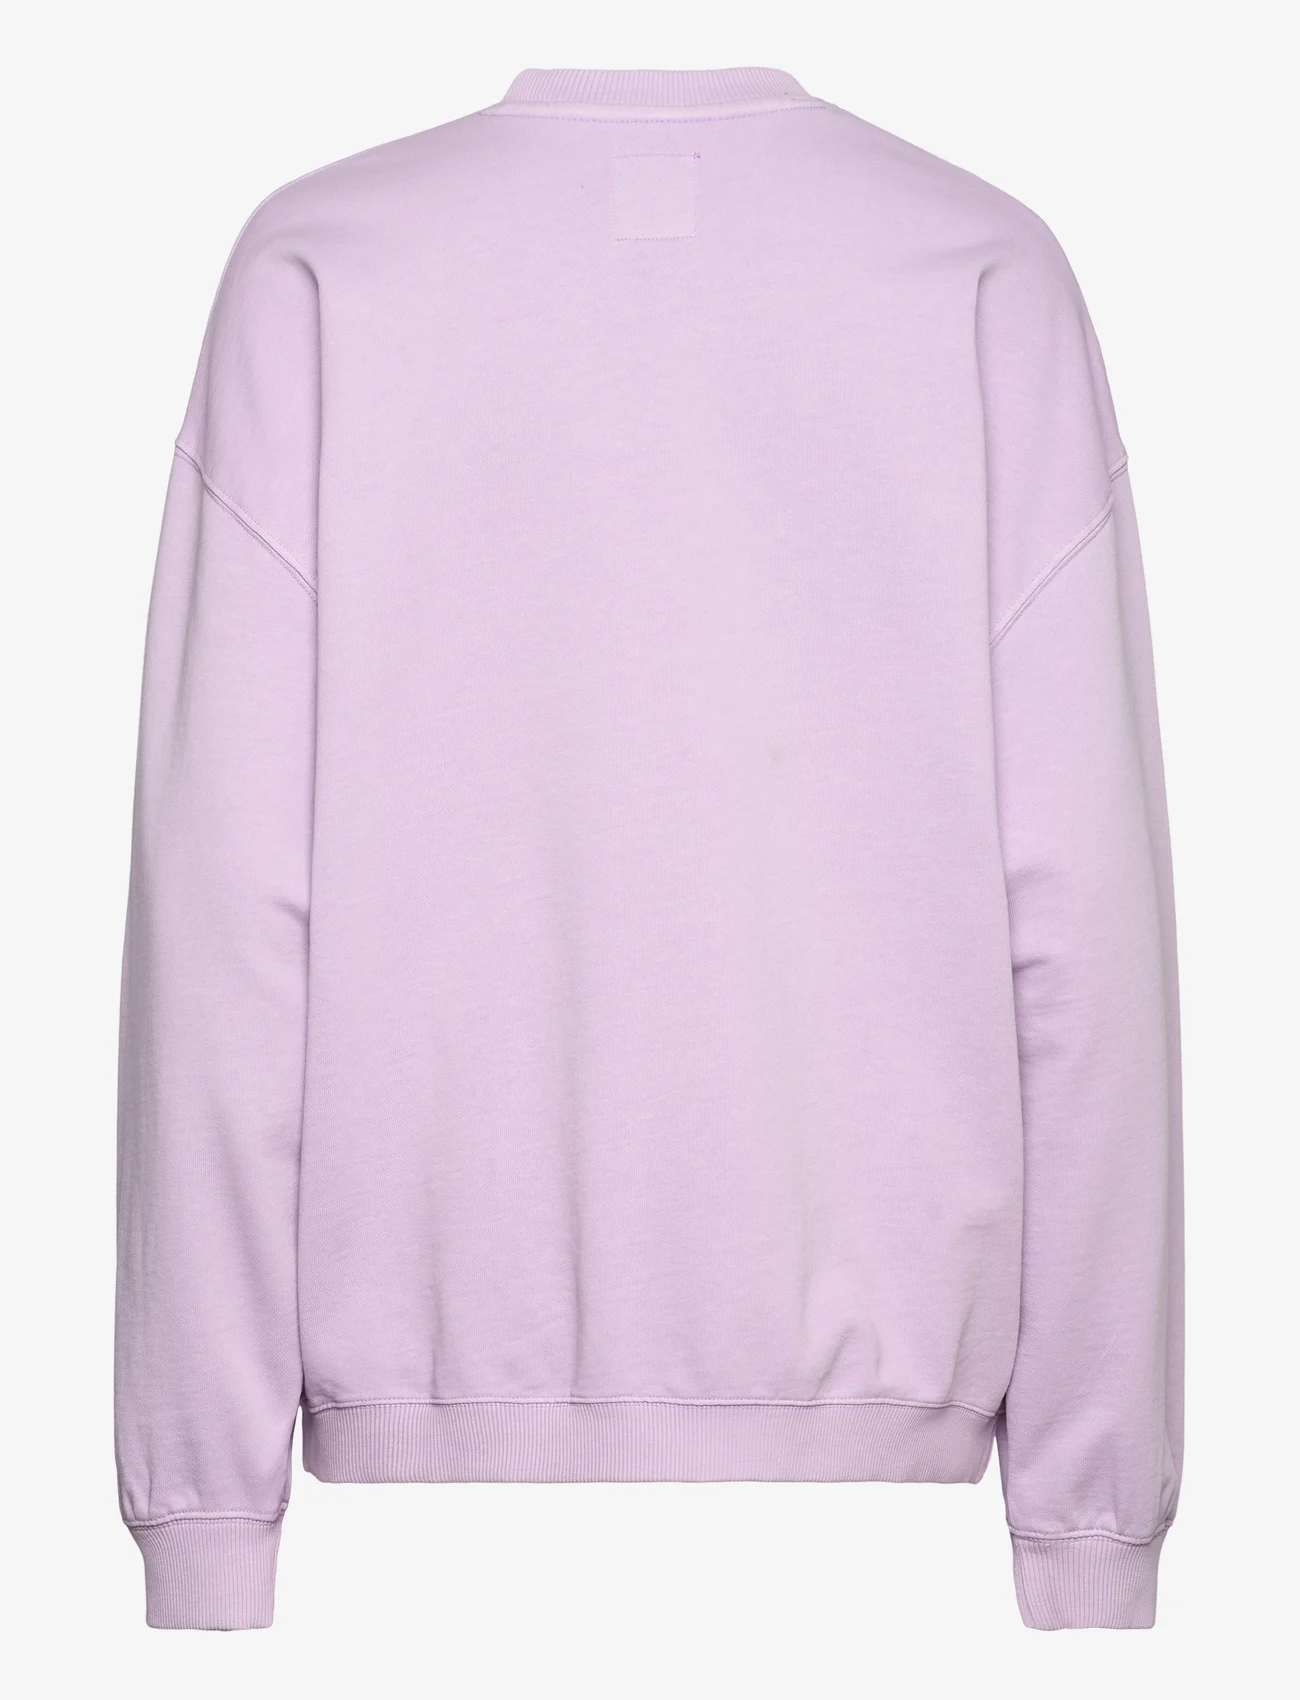 Billabong - RIDE IN - sportiska stila džemperi - peaceful lilac - 1